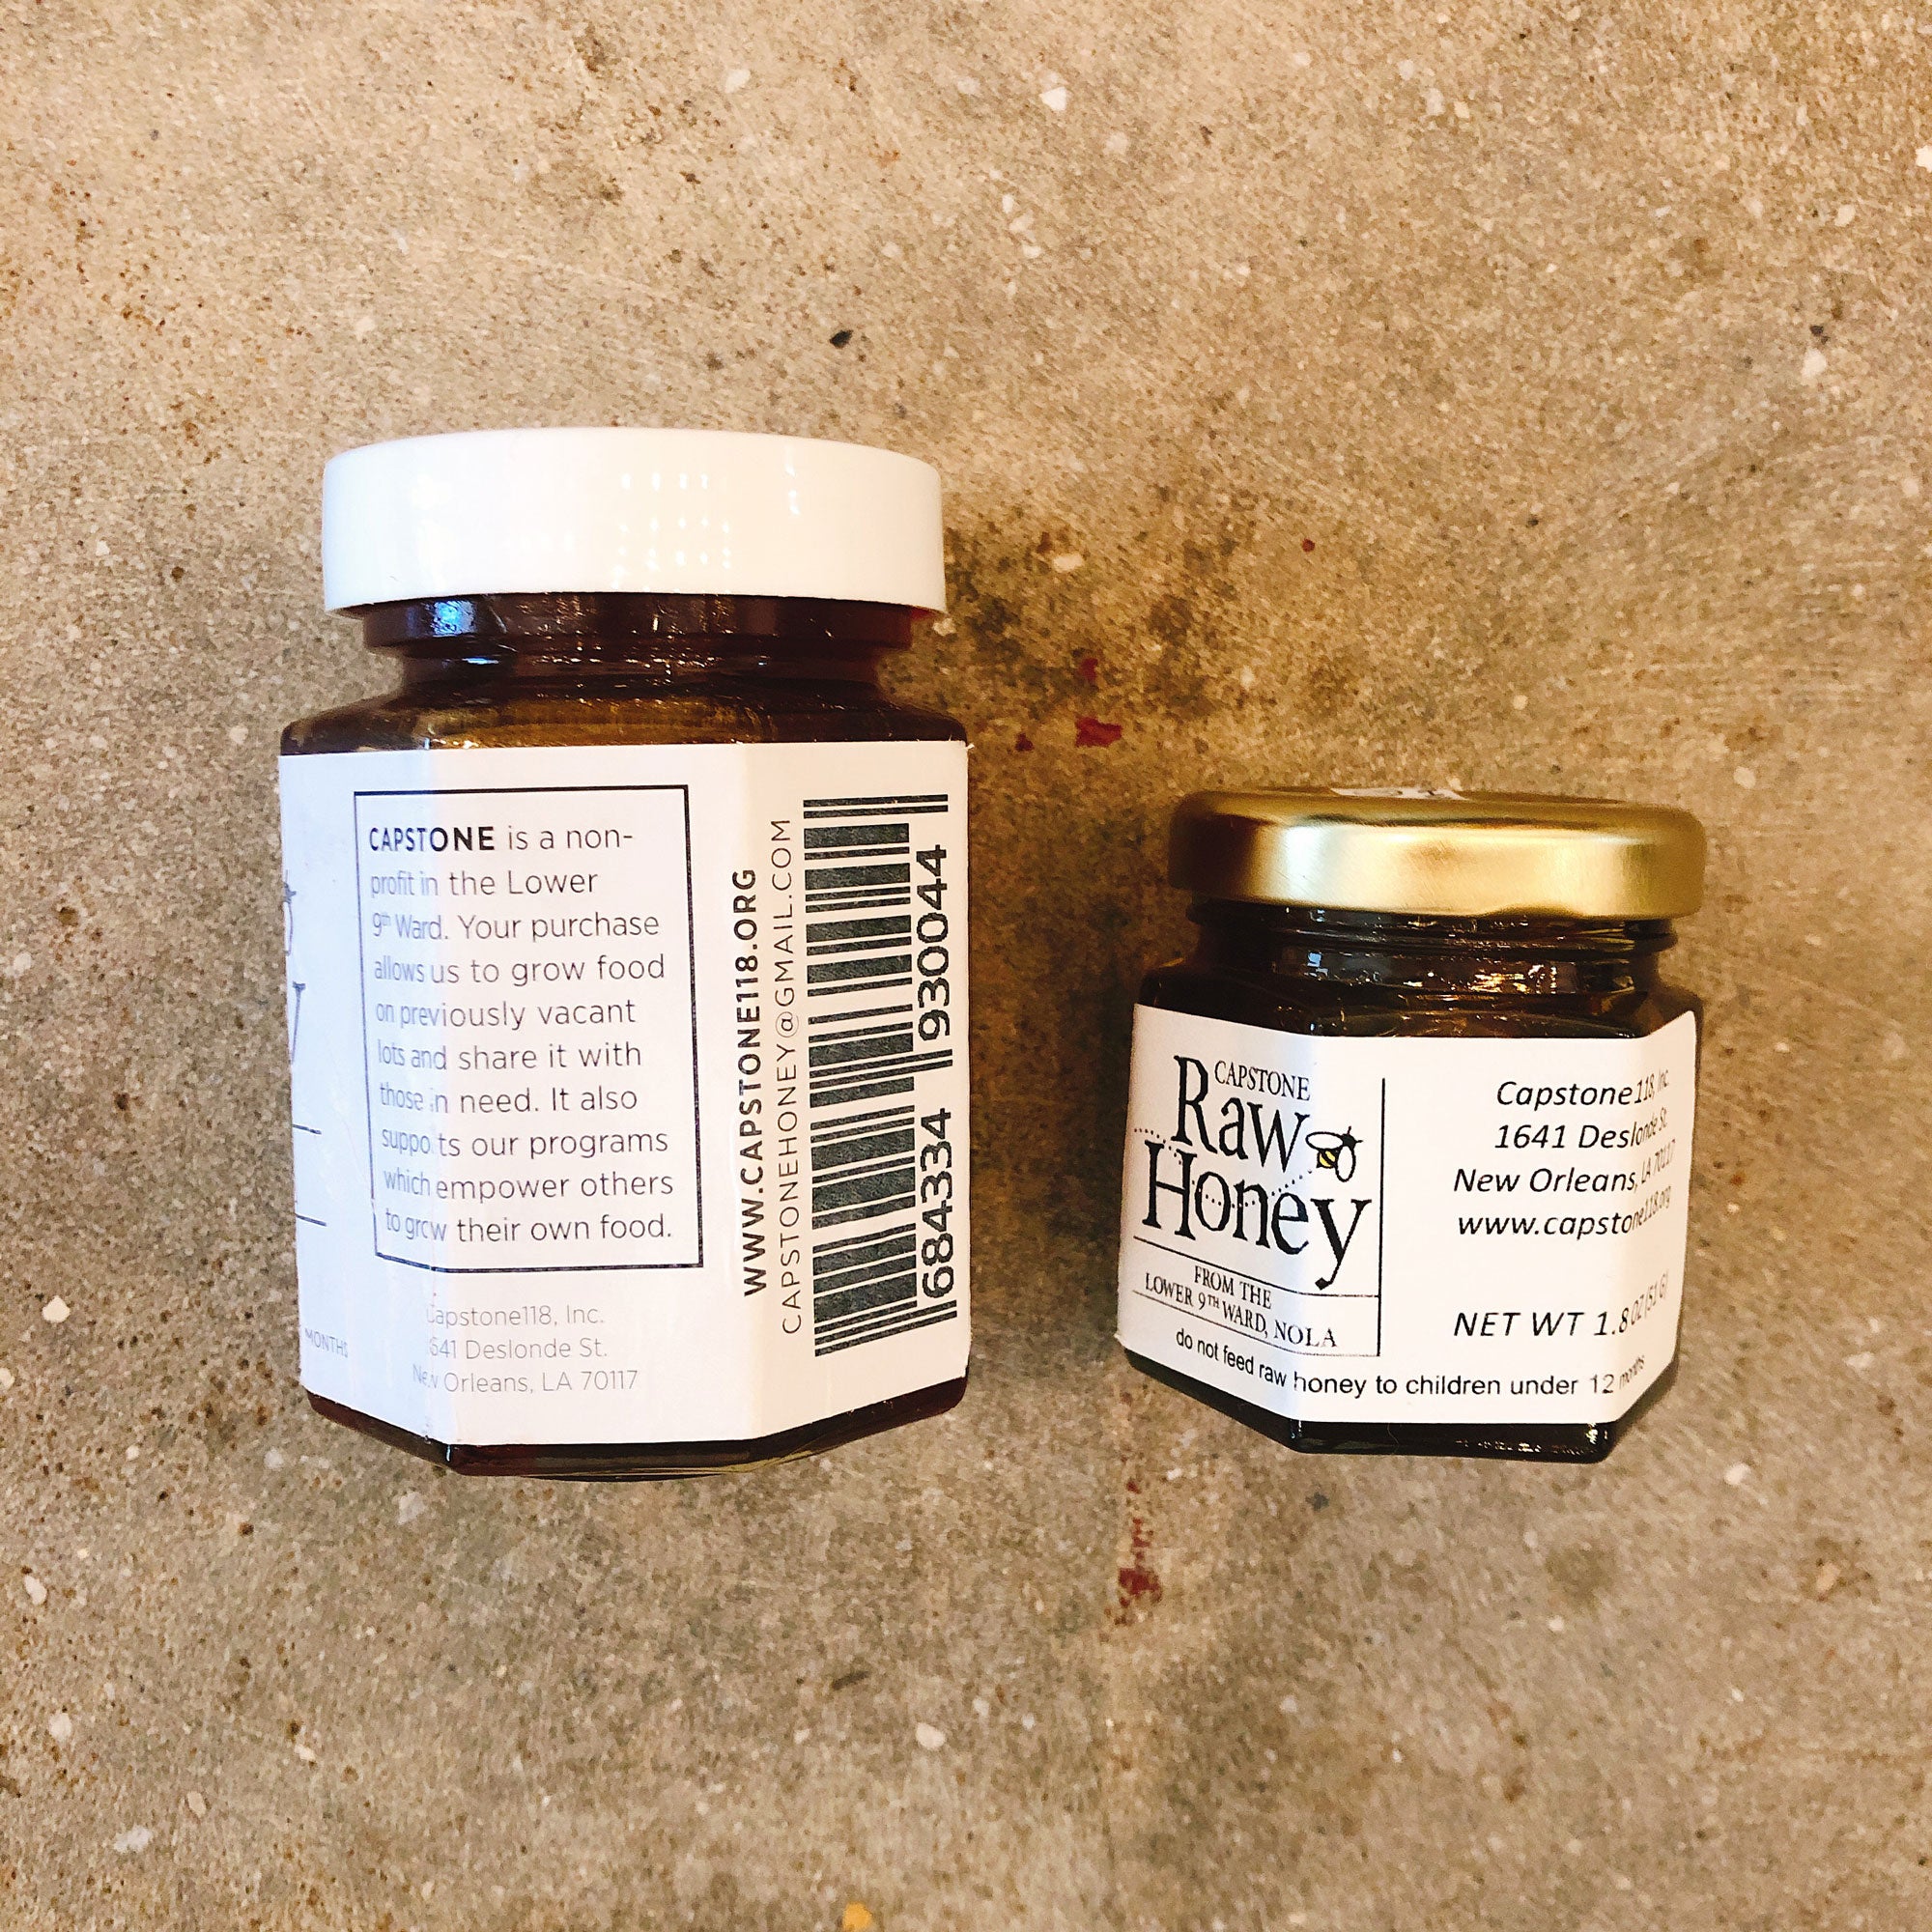 Capstone Honey - Local New Orleans Honey